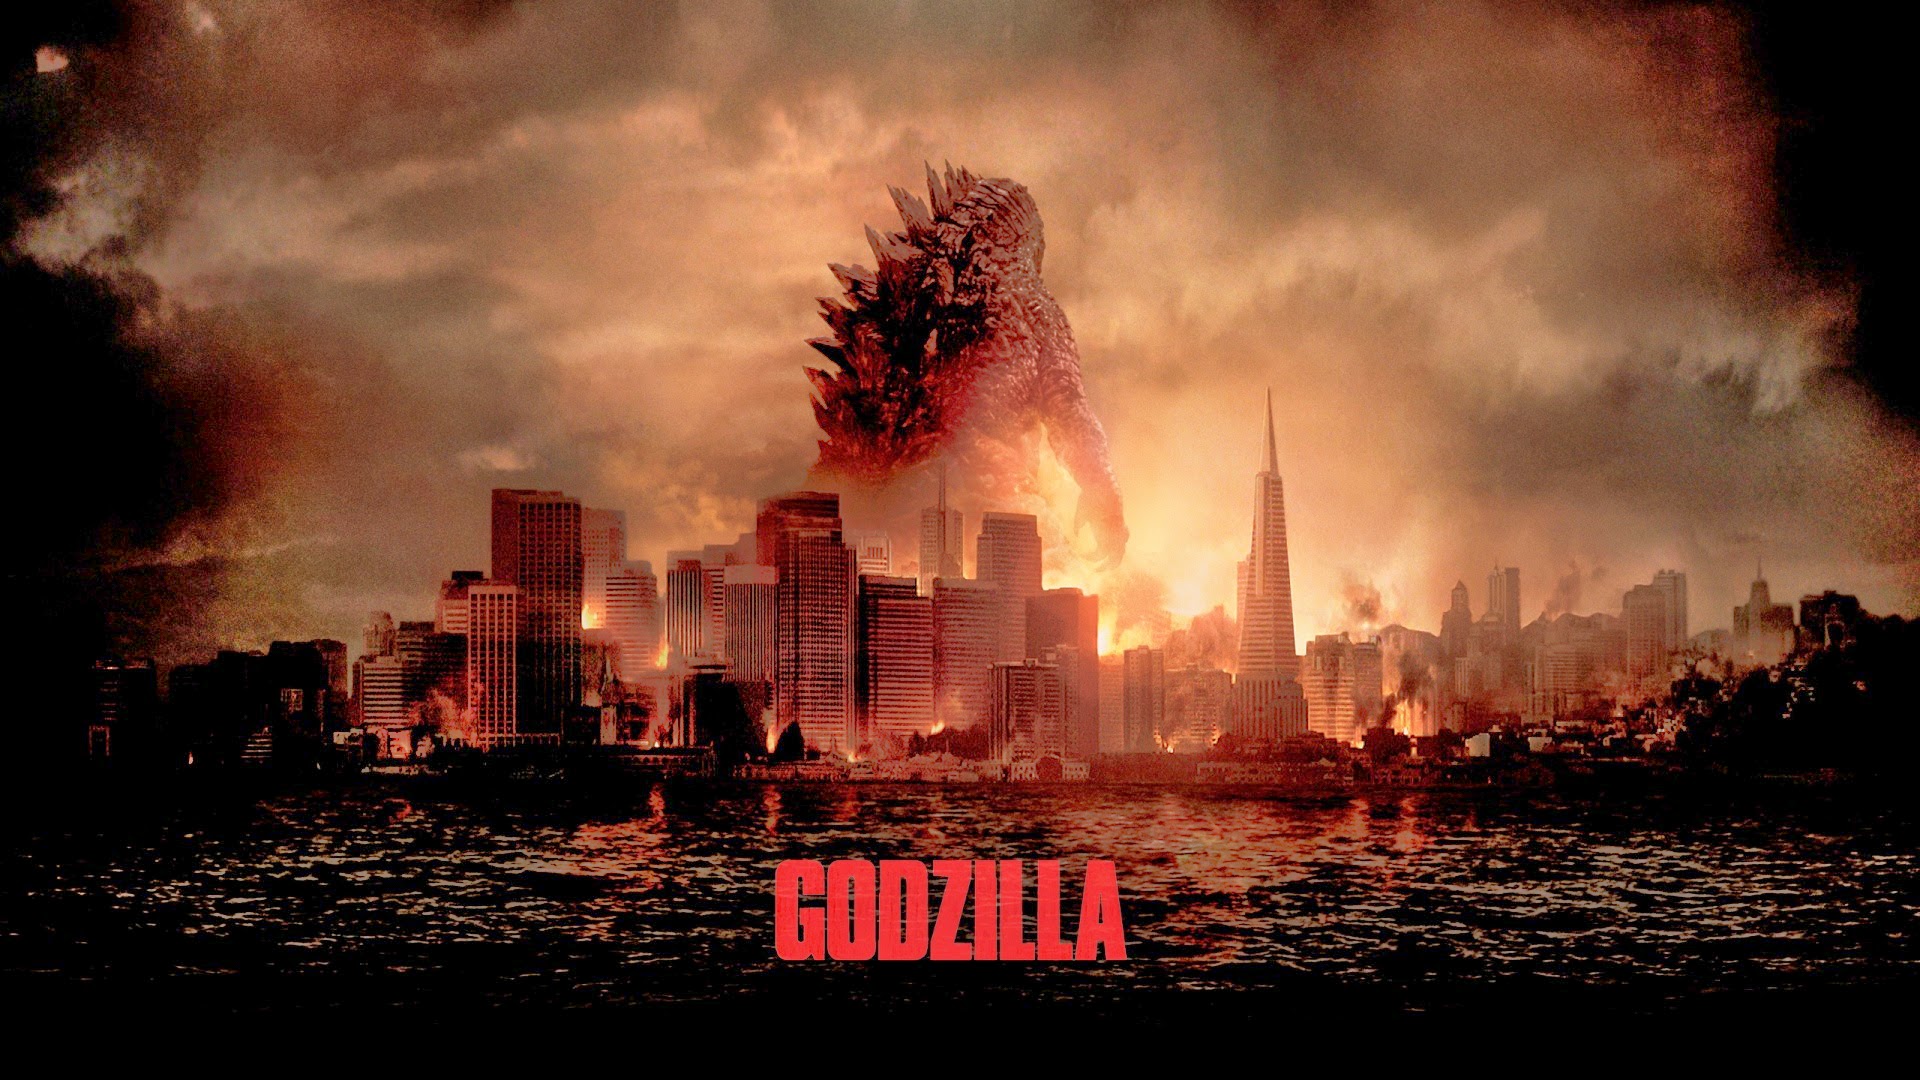 Godzilla 2014 Movie Wallpapers 16504 Wallpaper Wallpaper hd